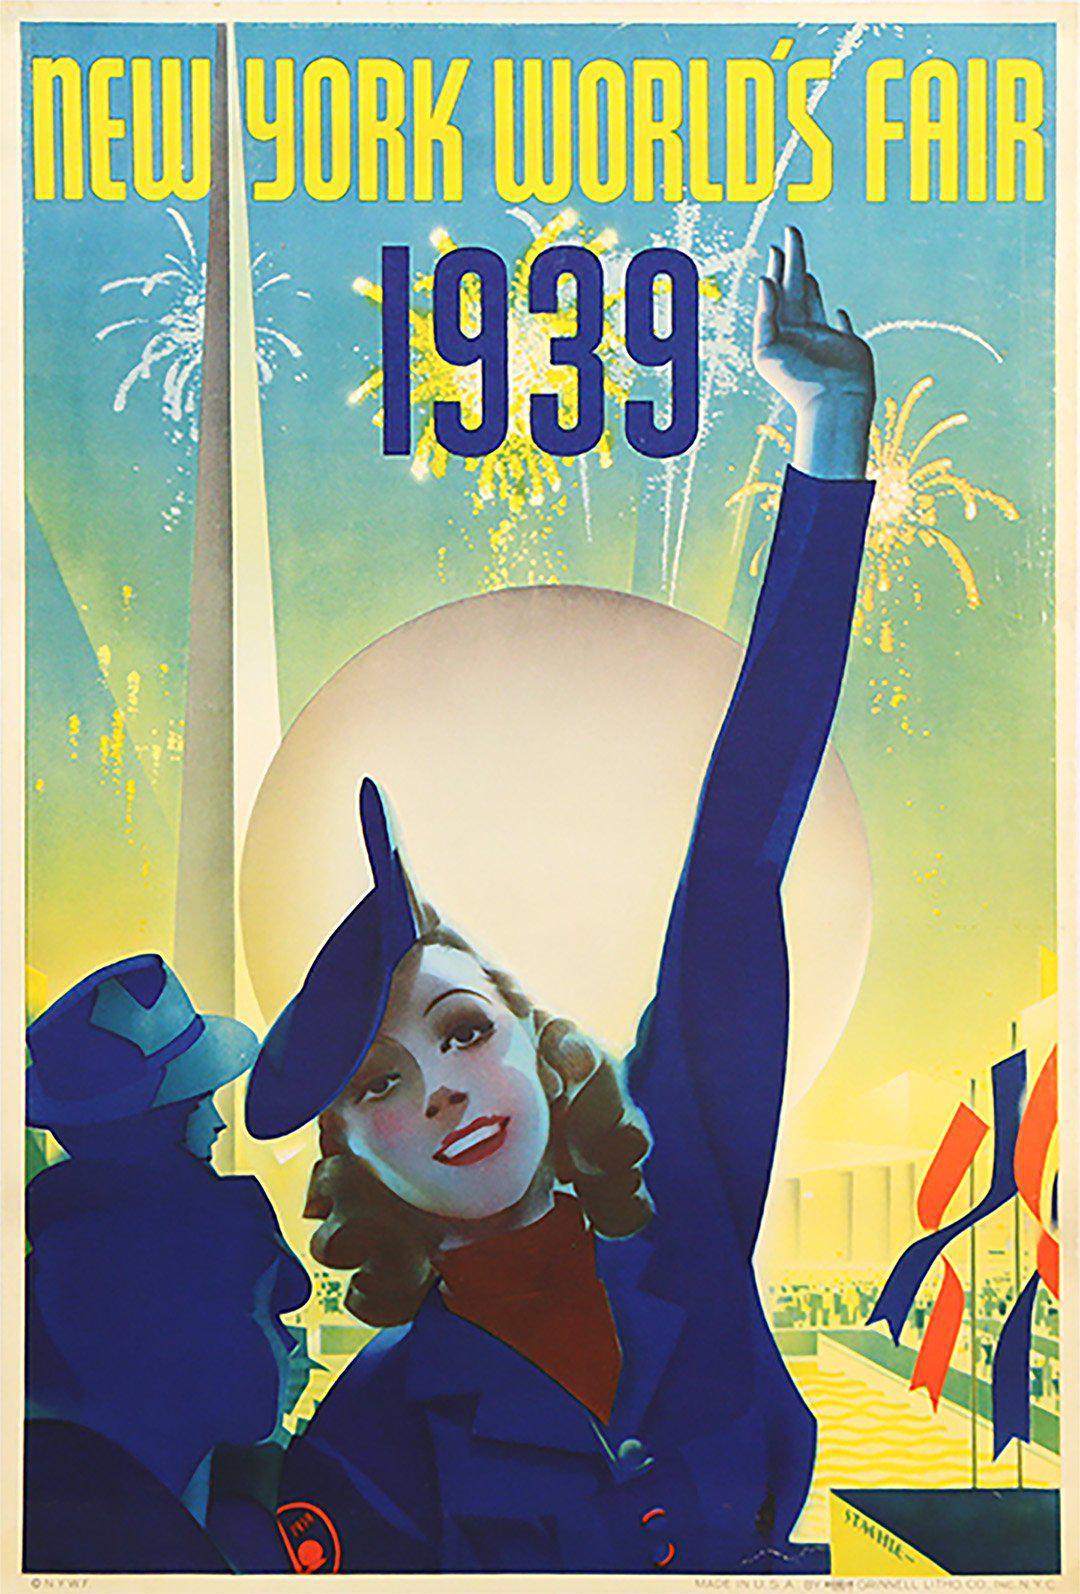 Original New York 1939 World's Fair Poster by Staehle - Medium